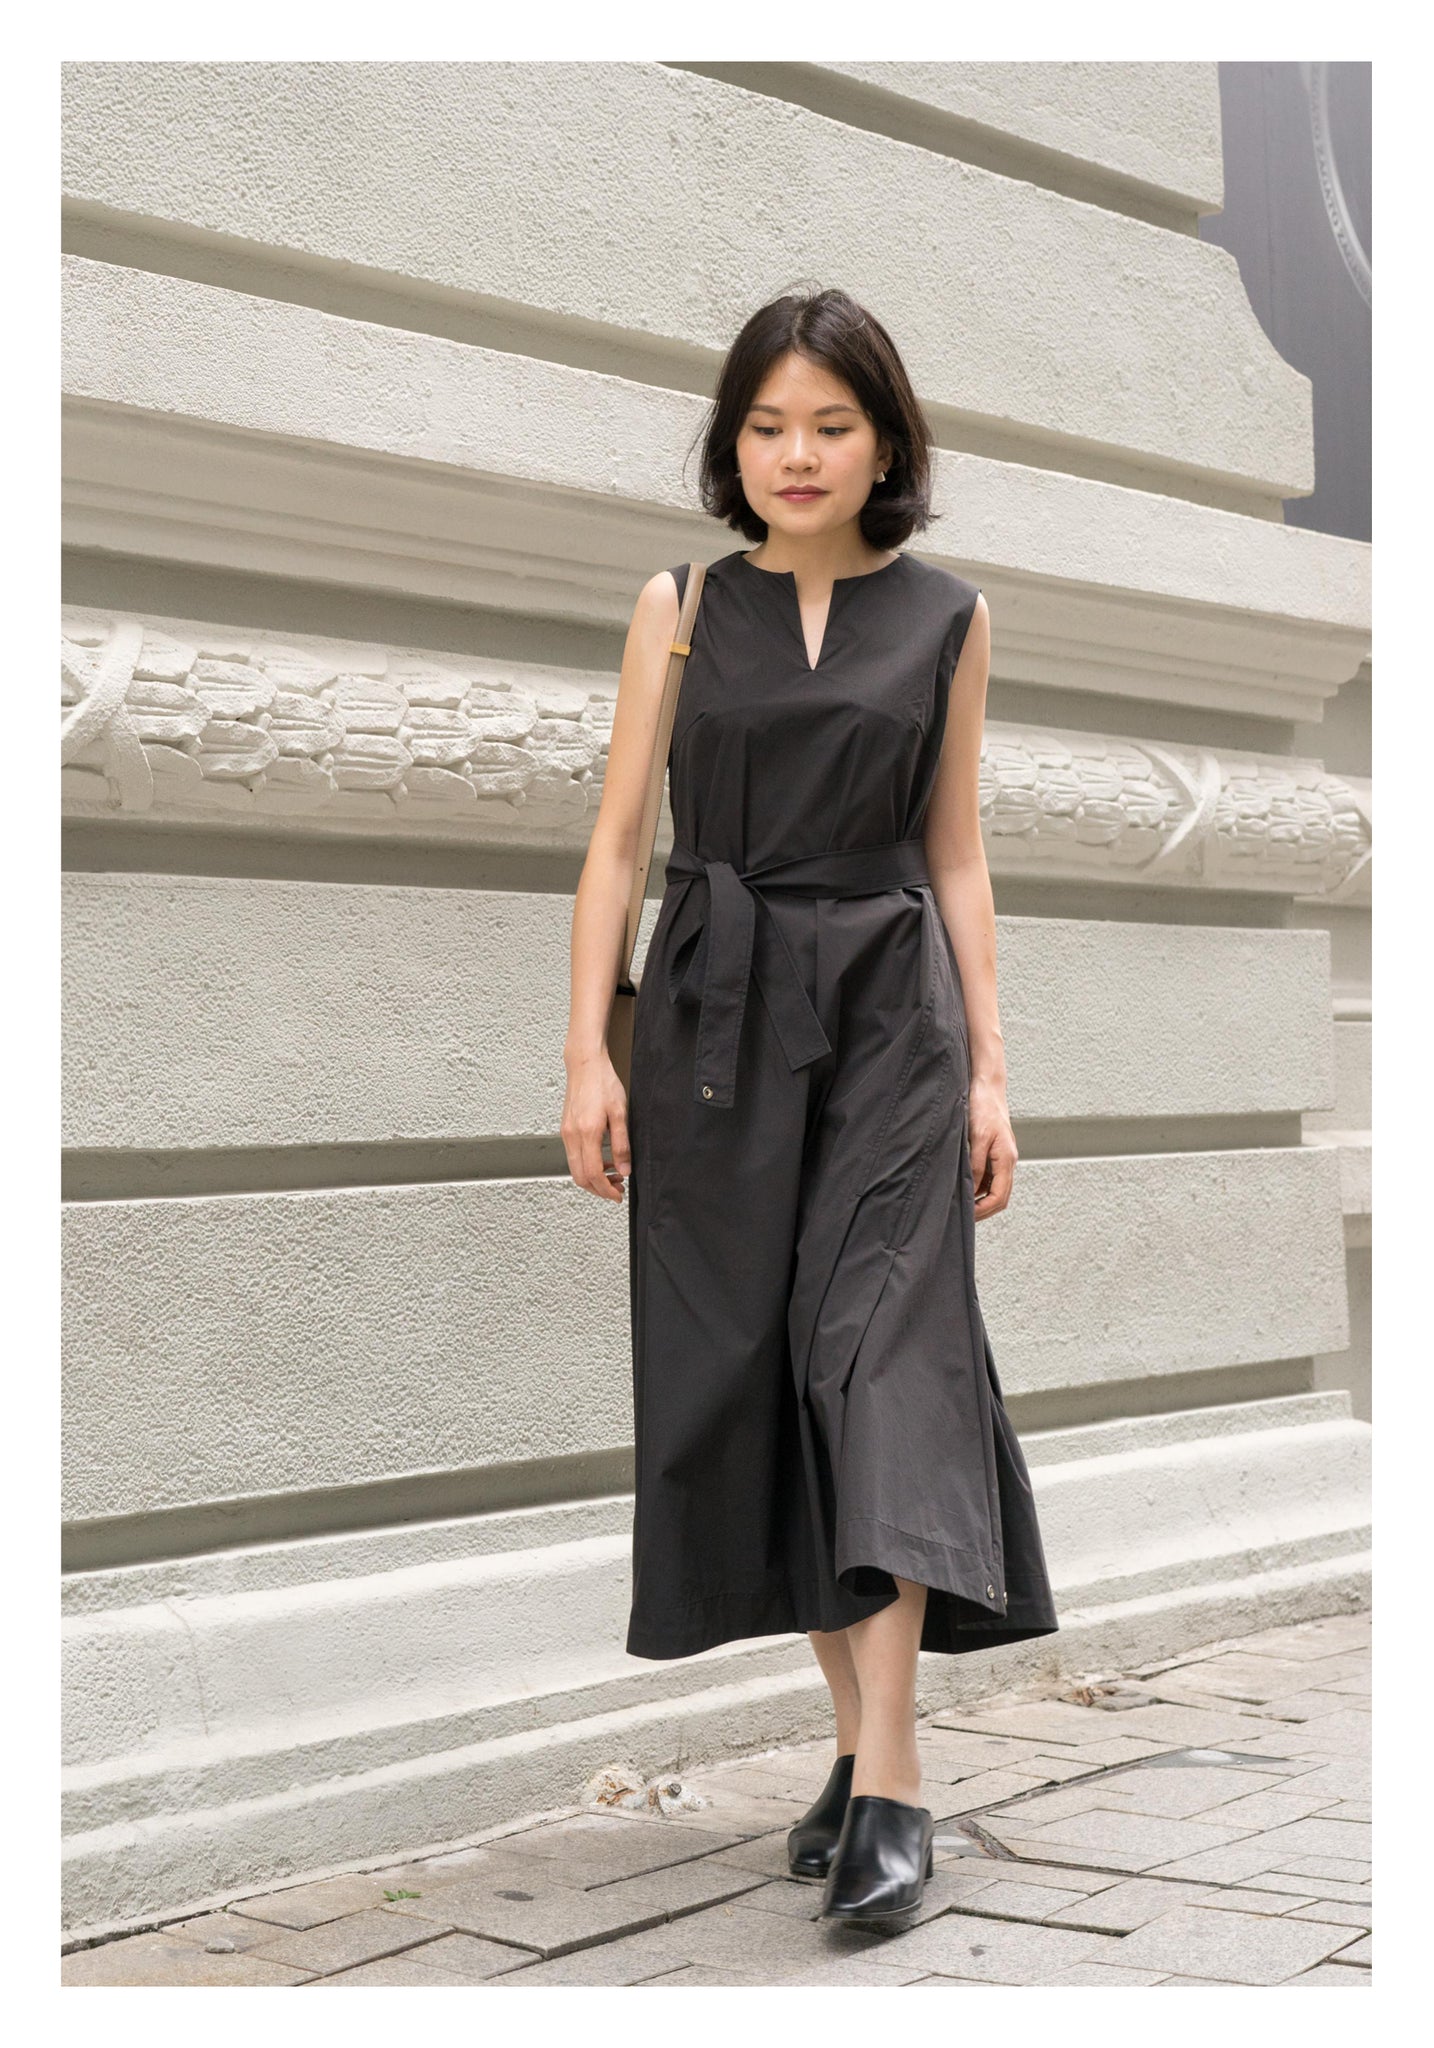 Silhouette Pleats Sleeveless Dress Black - whoami